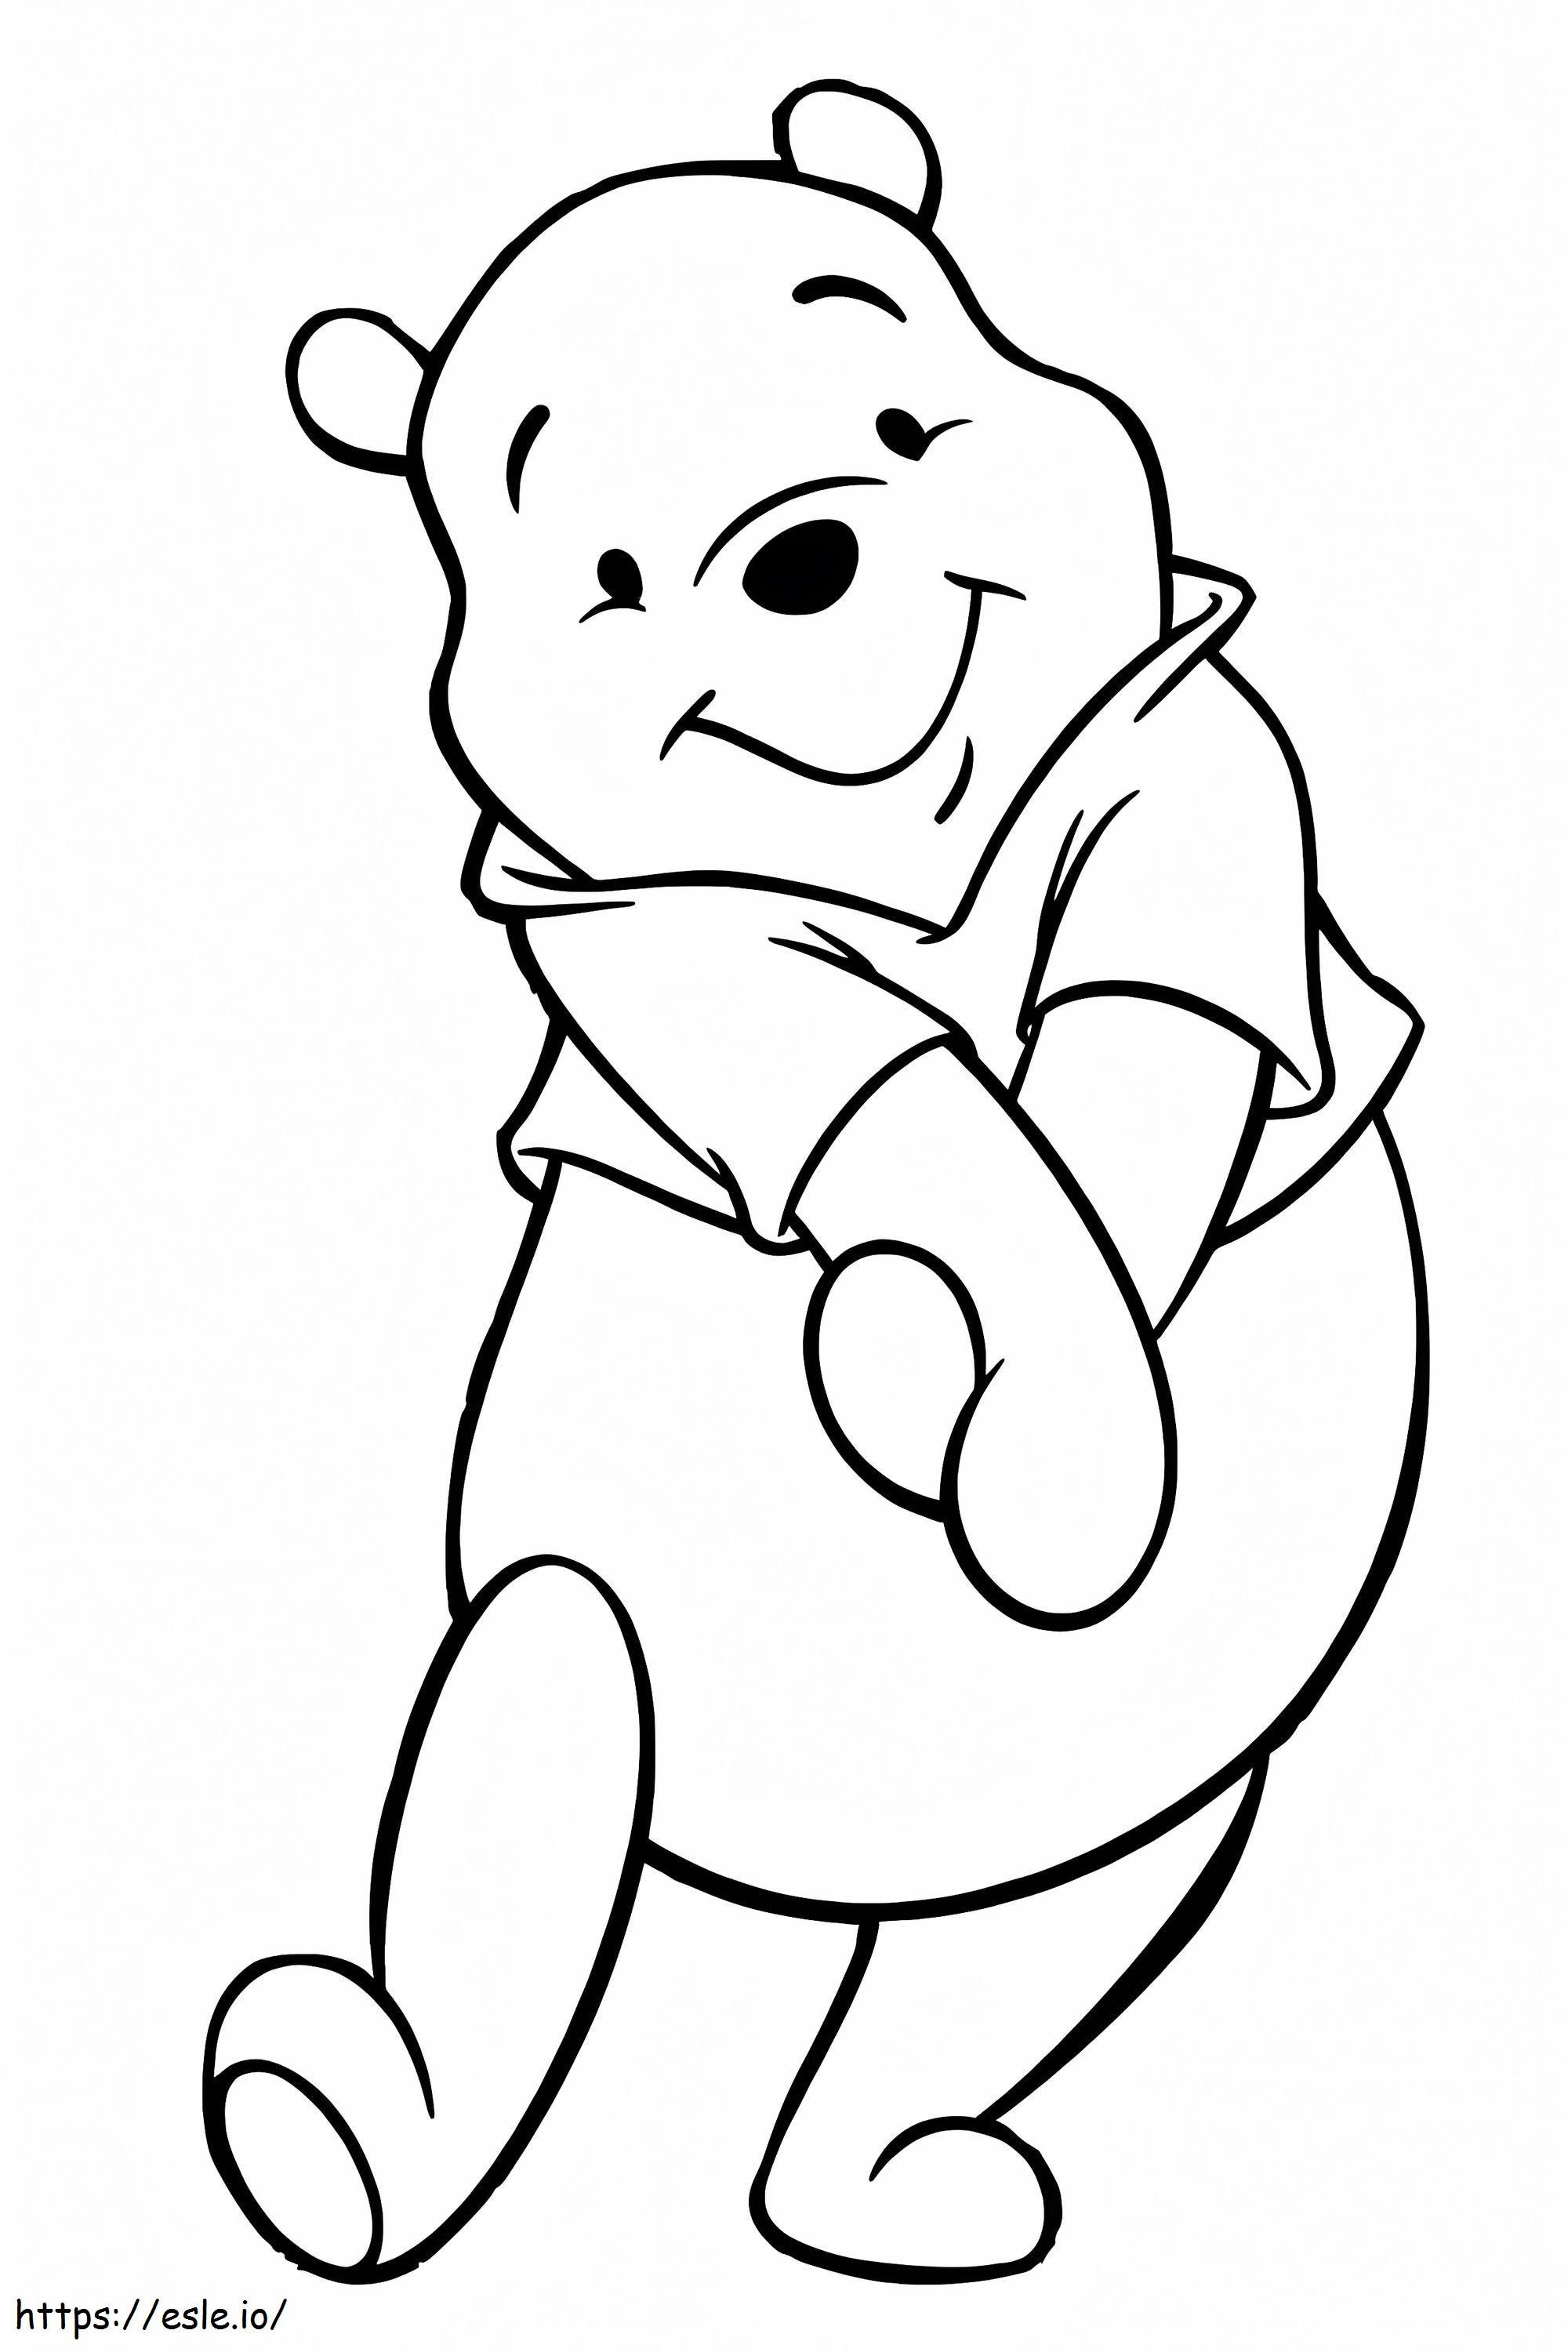 Coloriage Winnie l'ourson souriant à imprimer dessin